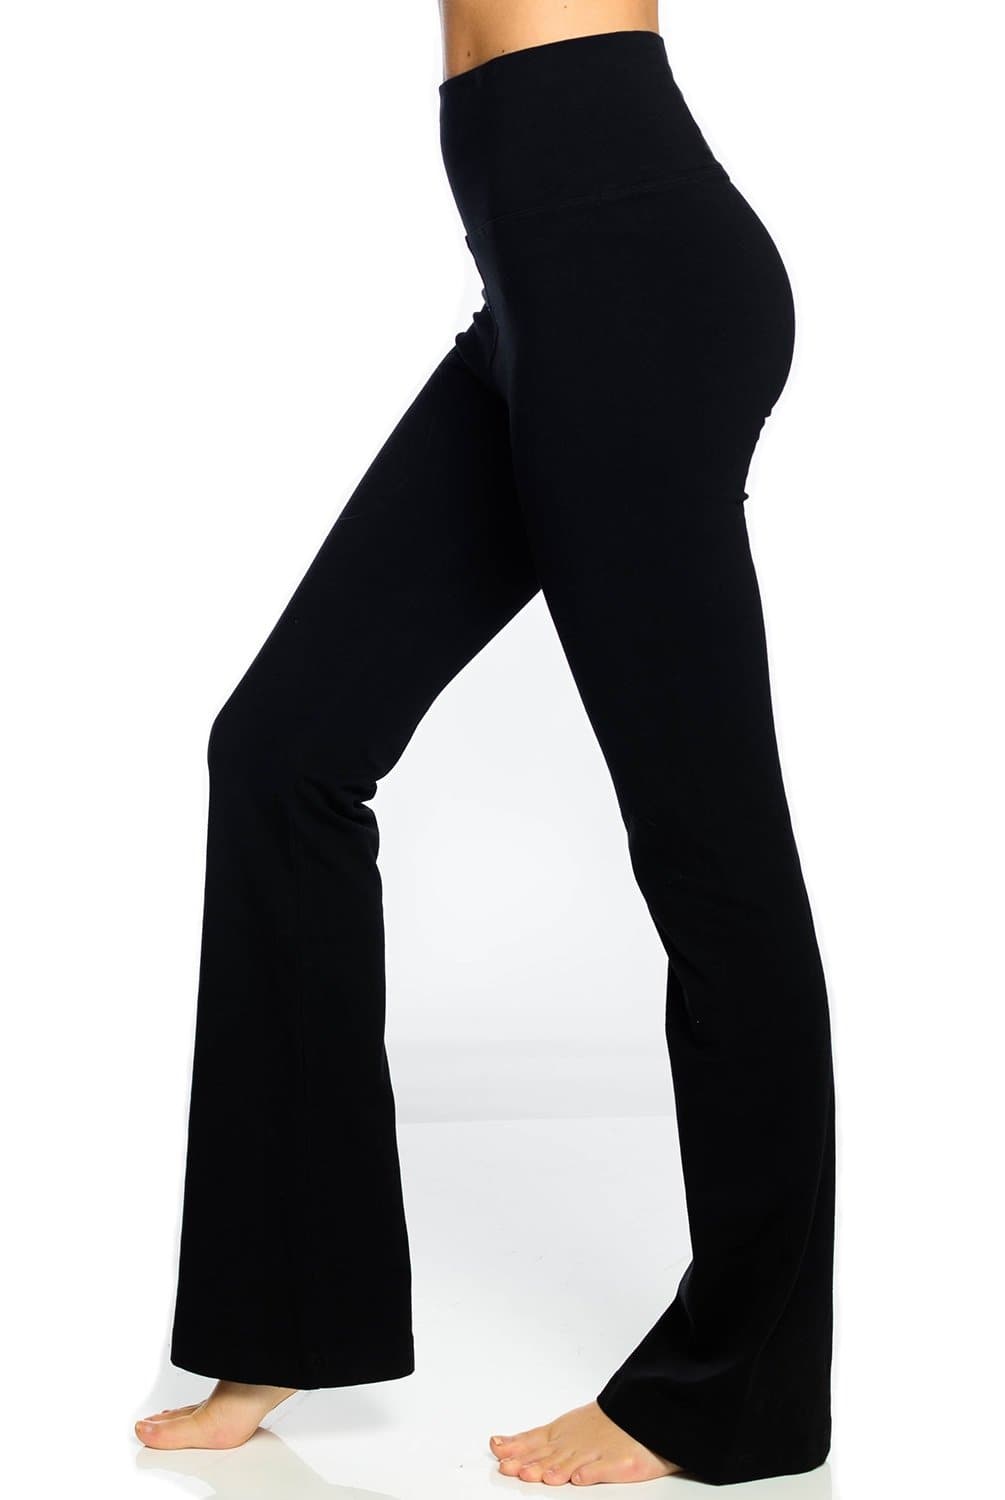 HardTail Rolldown Bootleg Pant - Black | Evolve Fit Wear